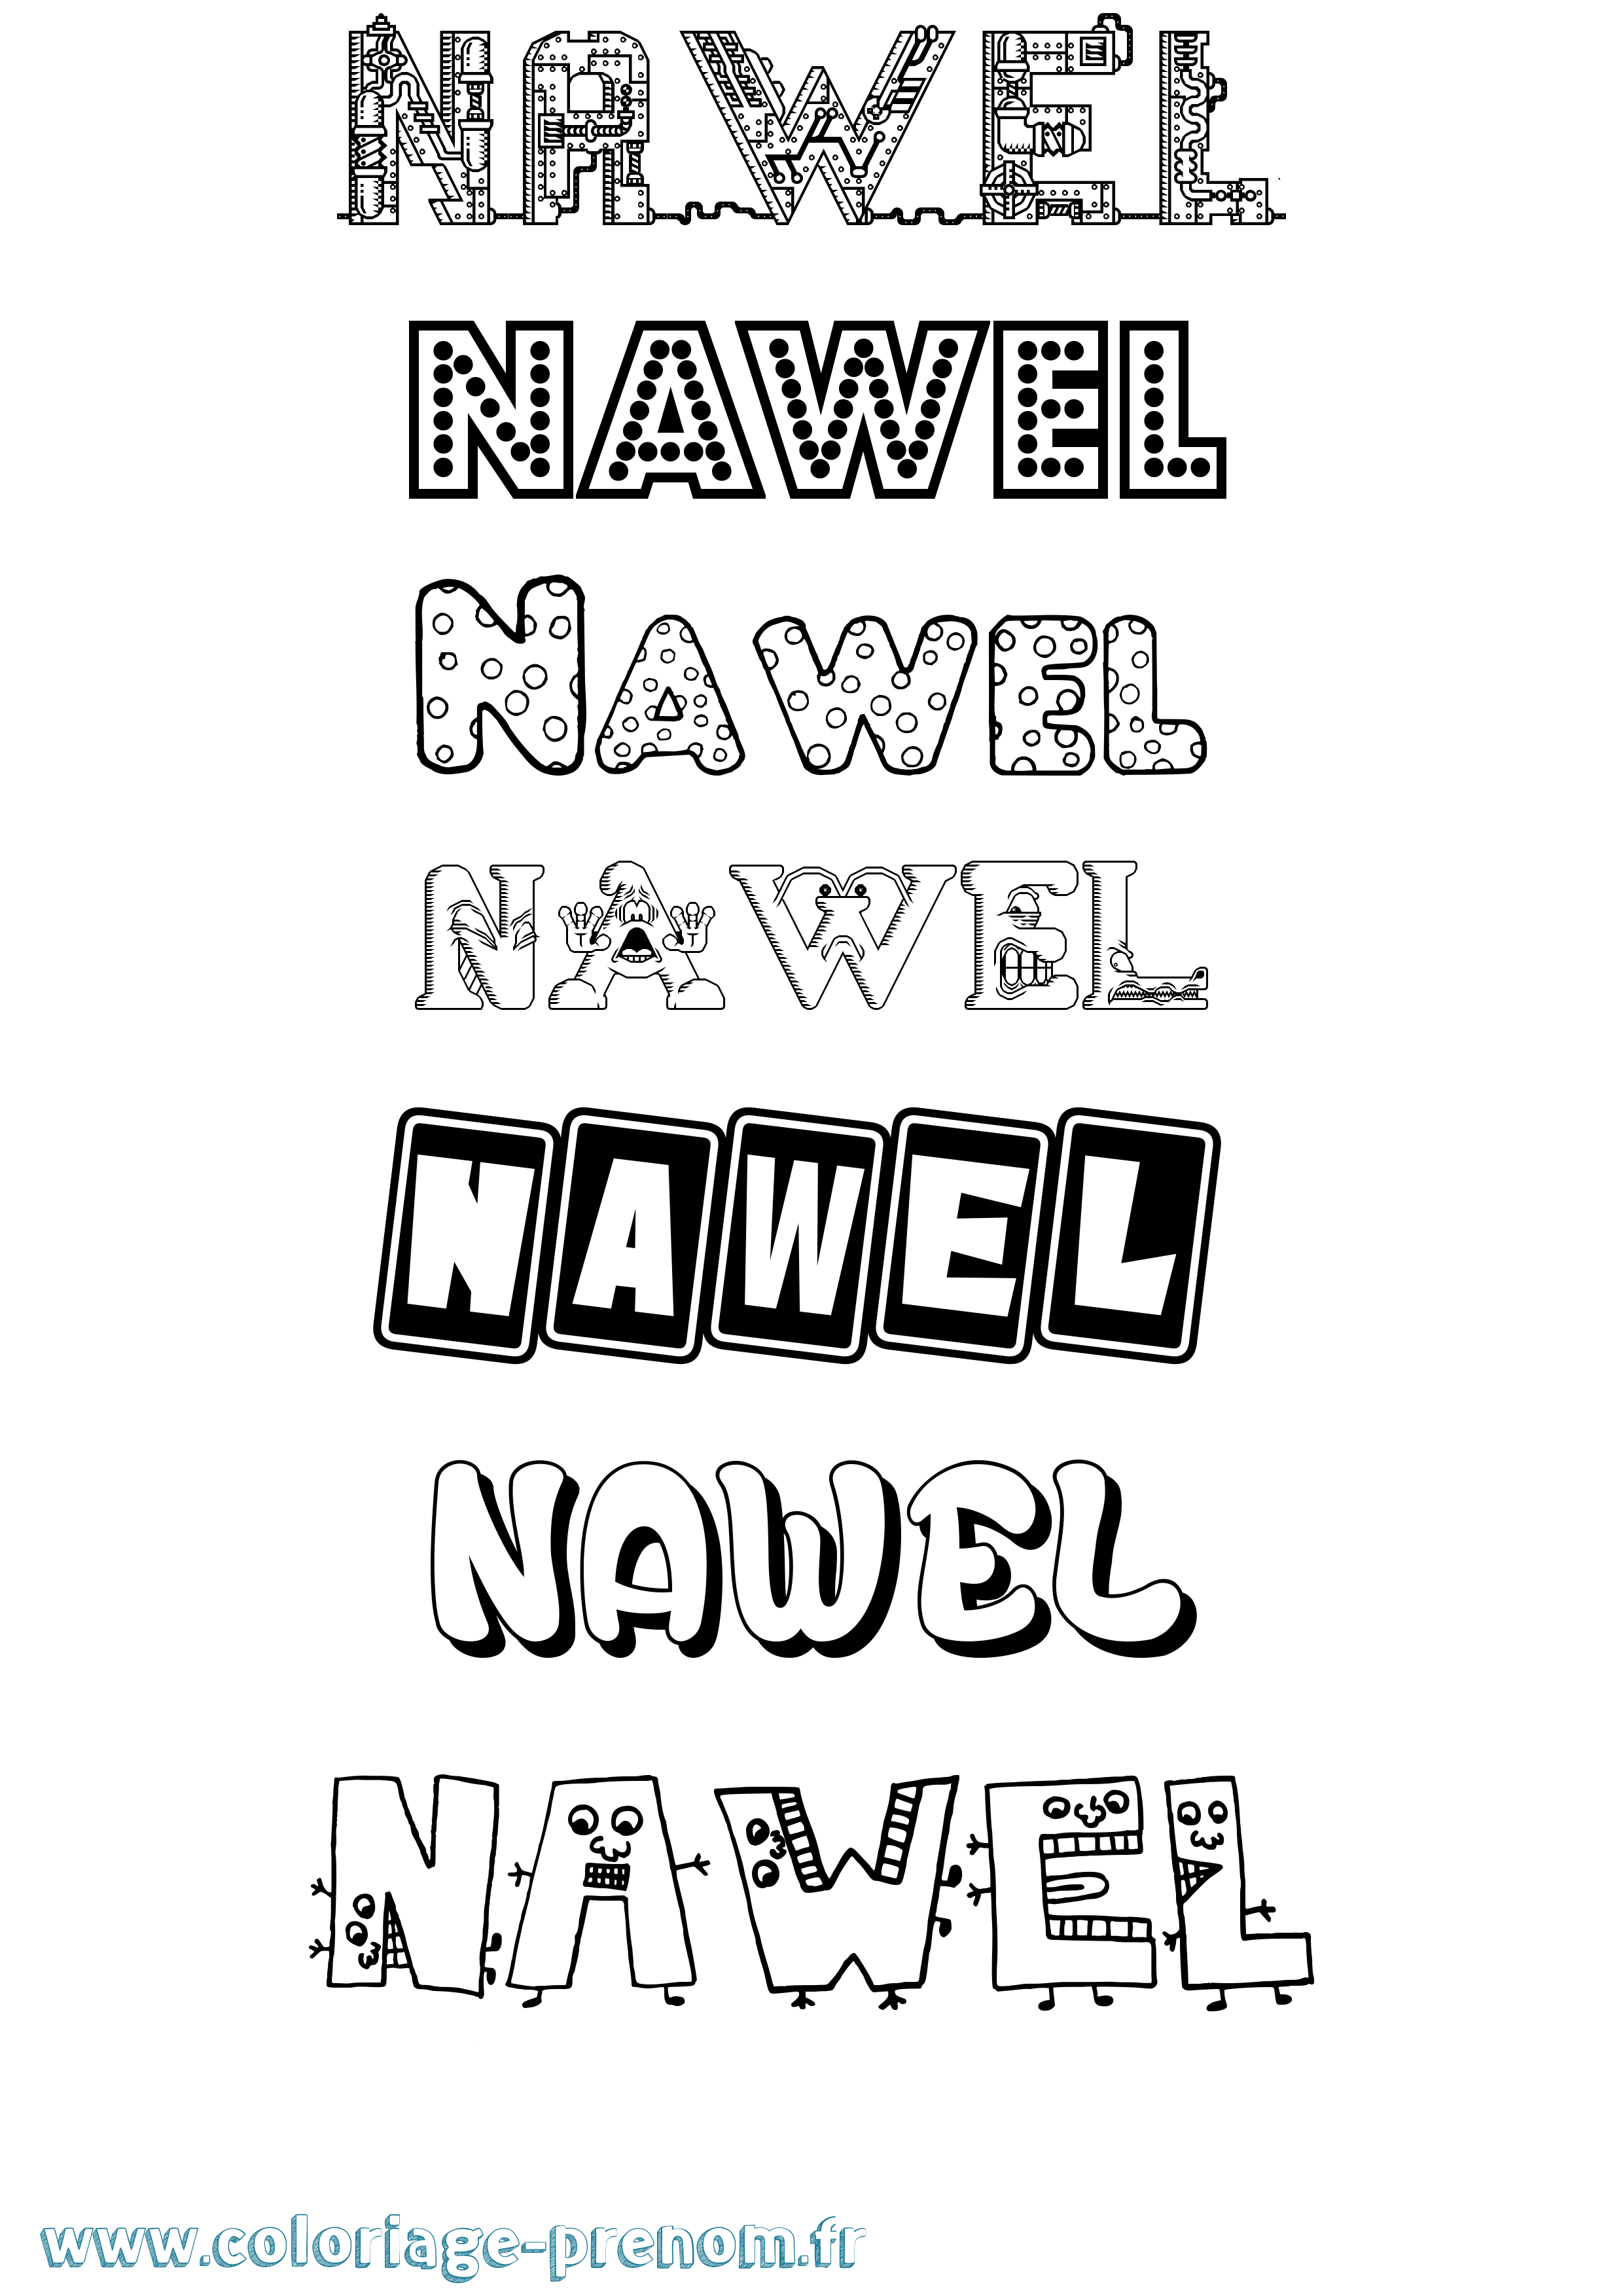 Coloriage prénom Nawel